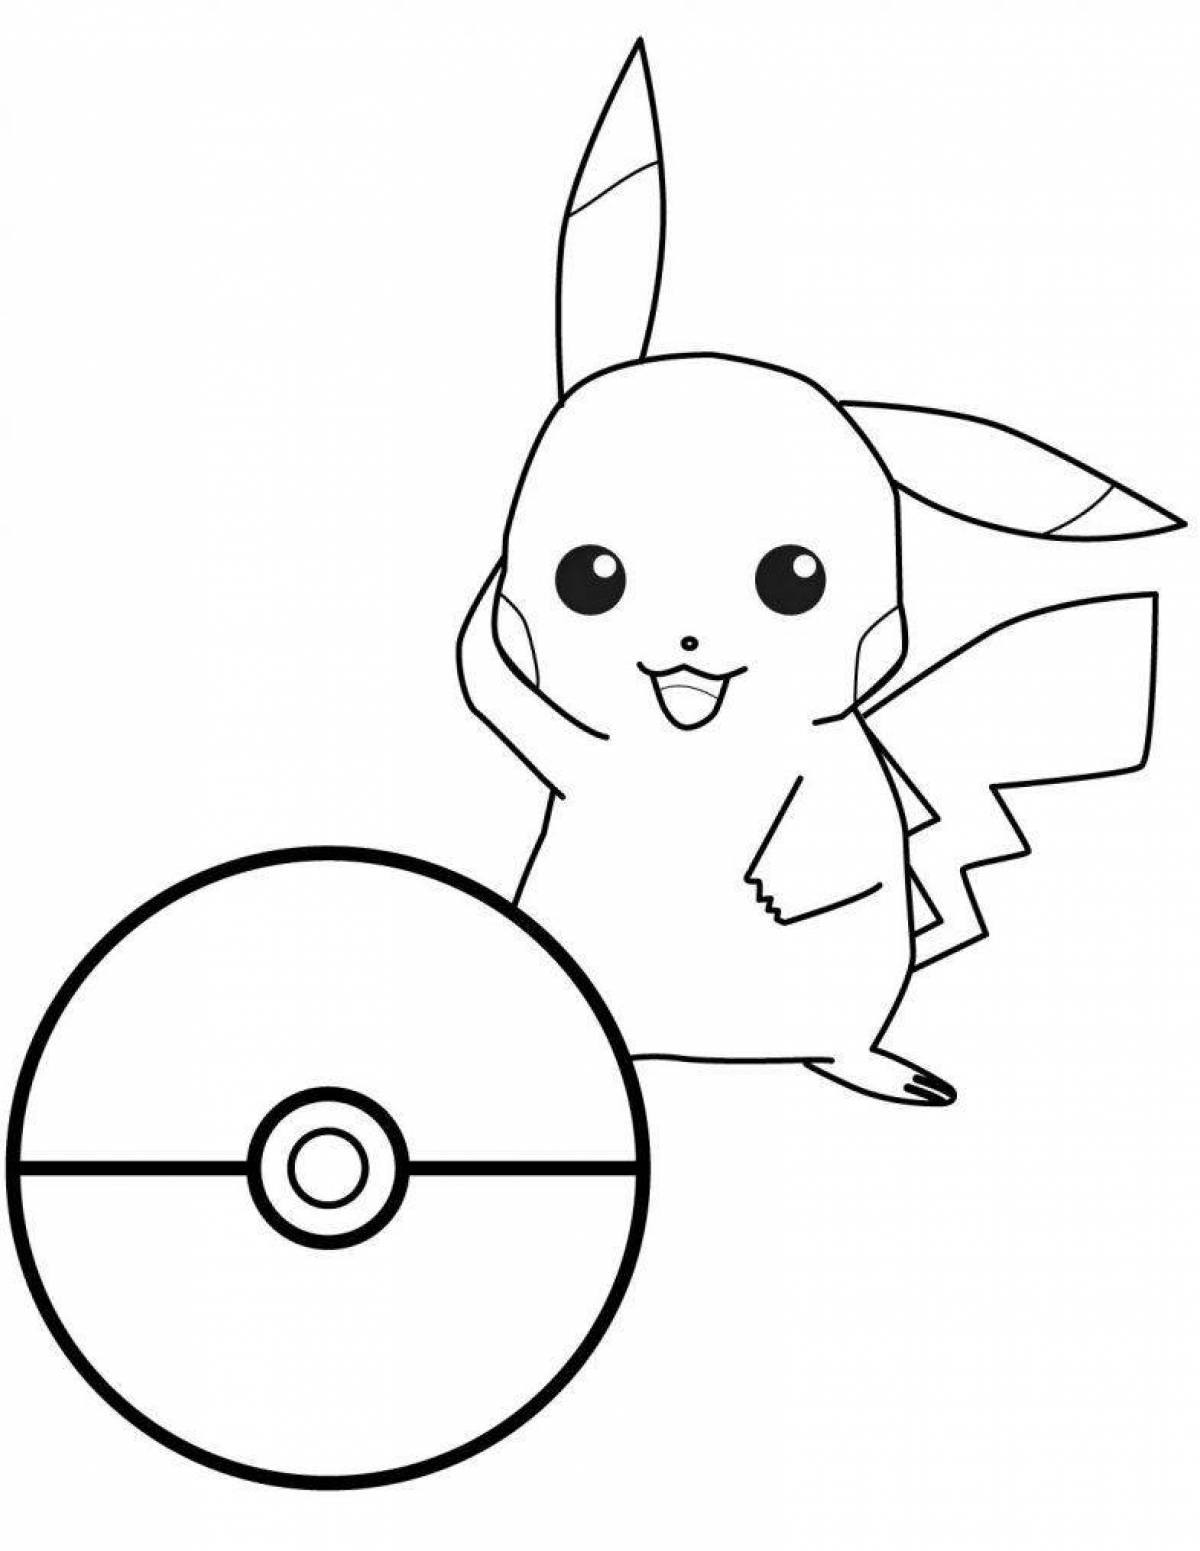 Animated pikachu and pokeball coloring page